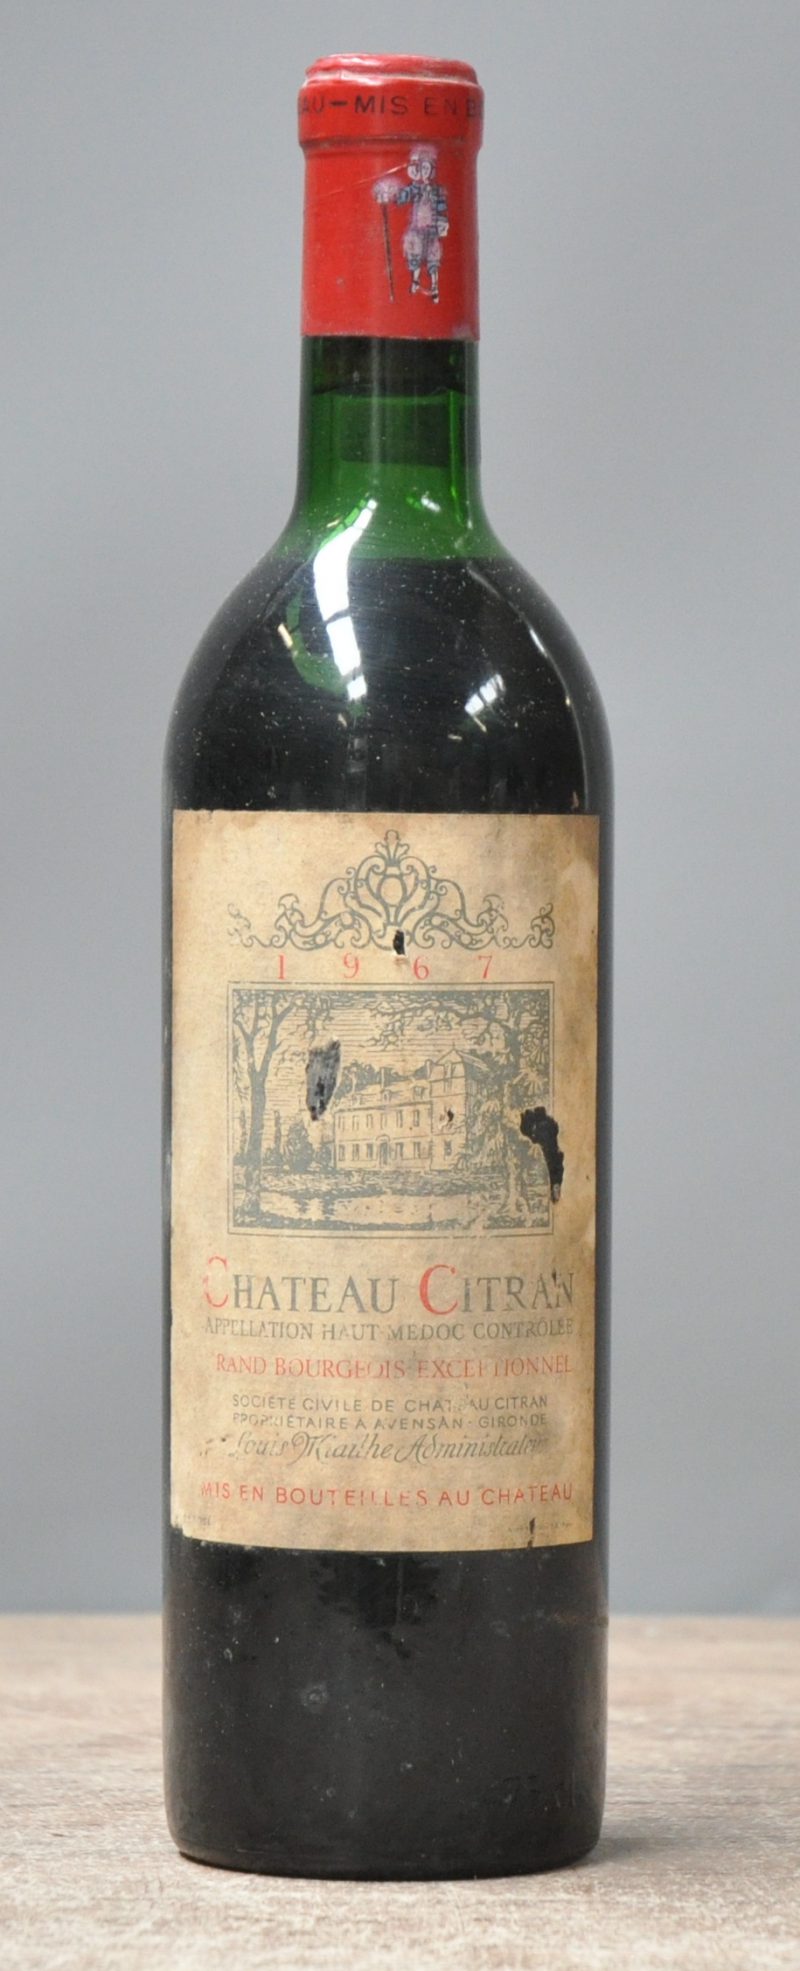 Ch. Citran A.C. Haut-Médoc Cru bourgeois  M.C.  1967  aantal: 2 Bt. ts